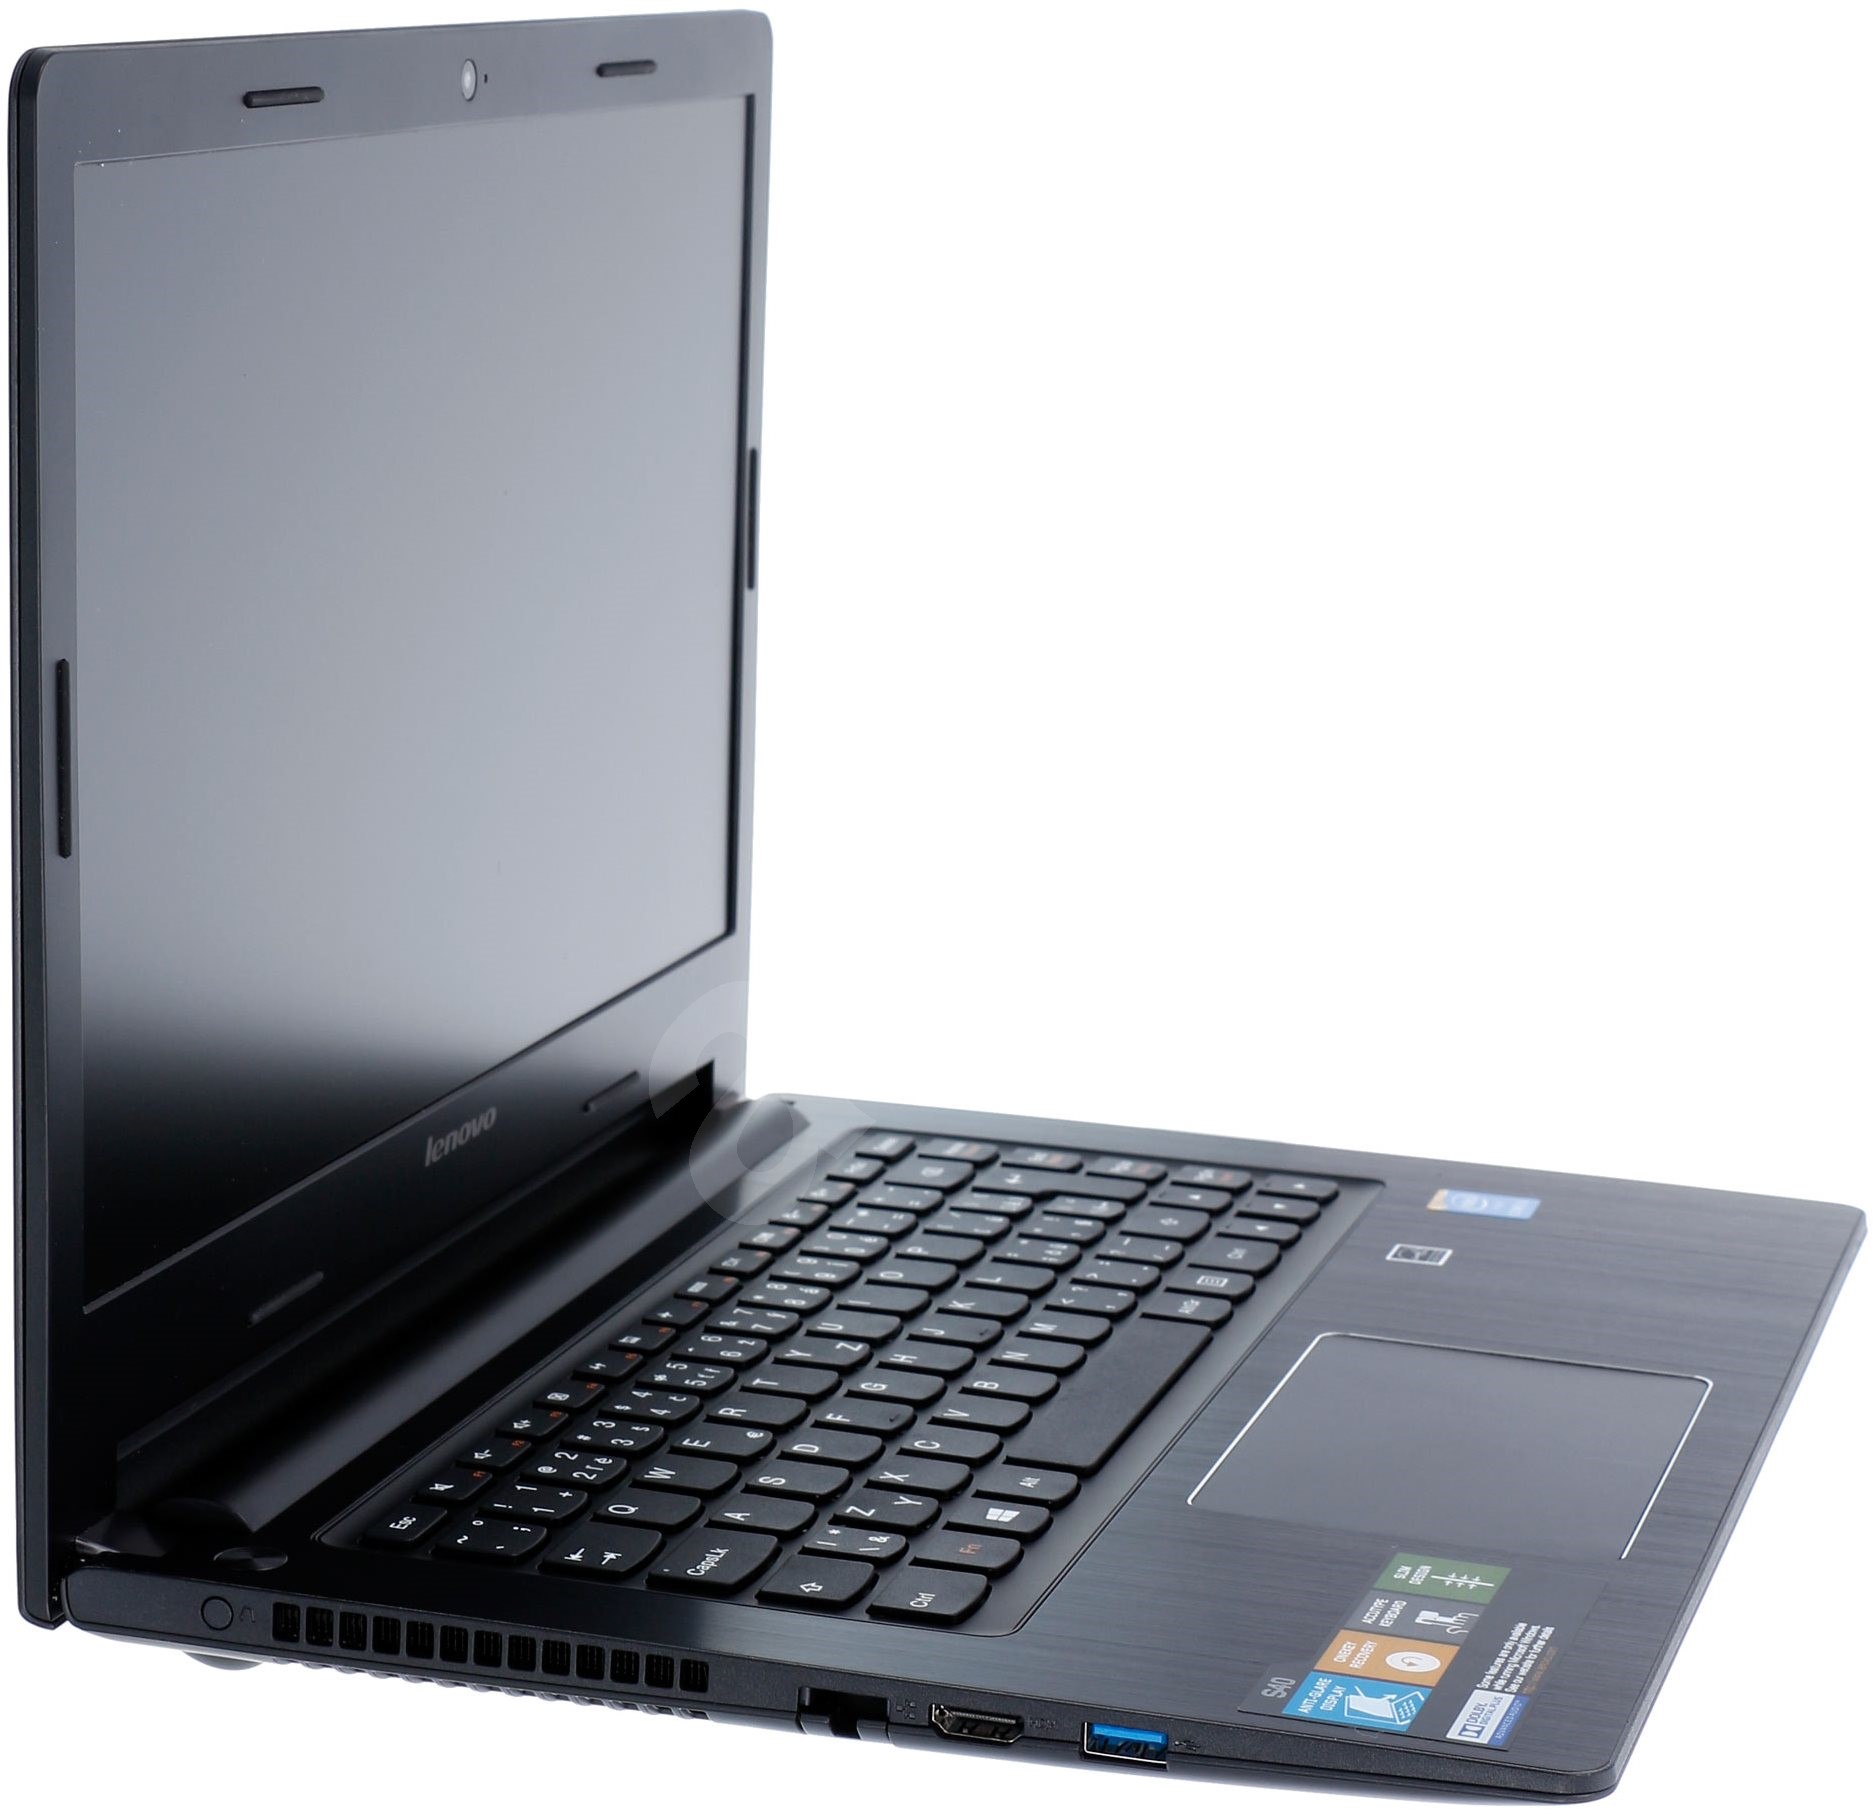 Lenovo S40 70 Notebook0